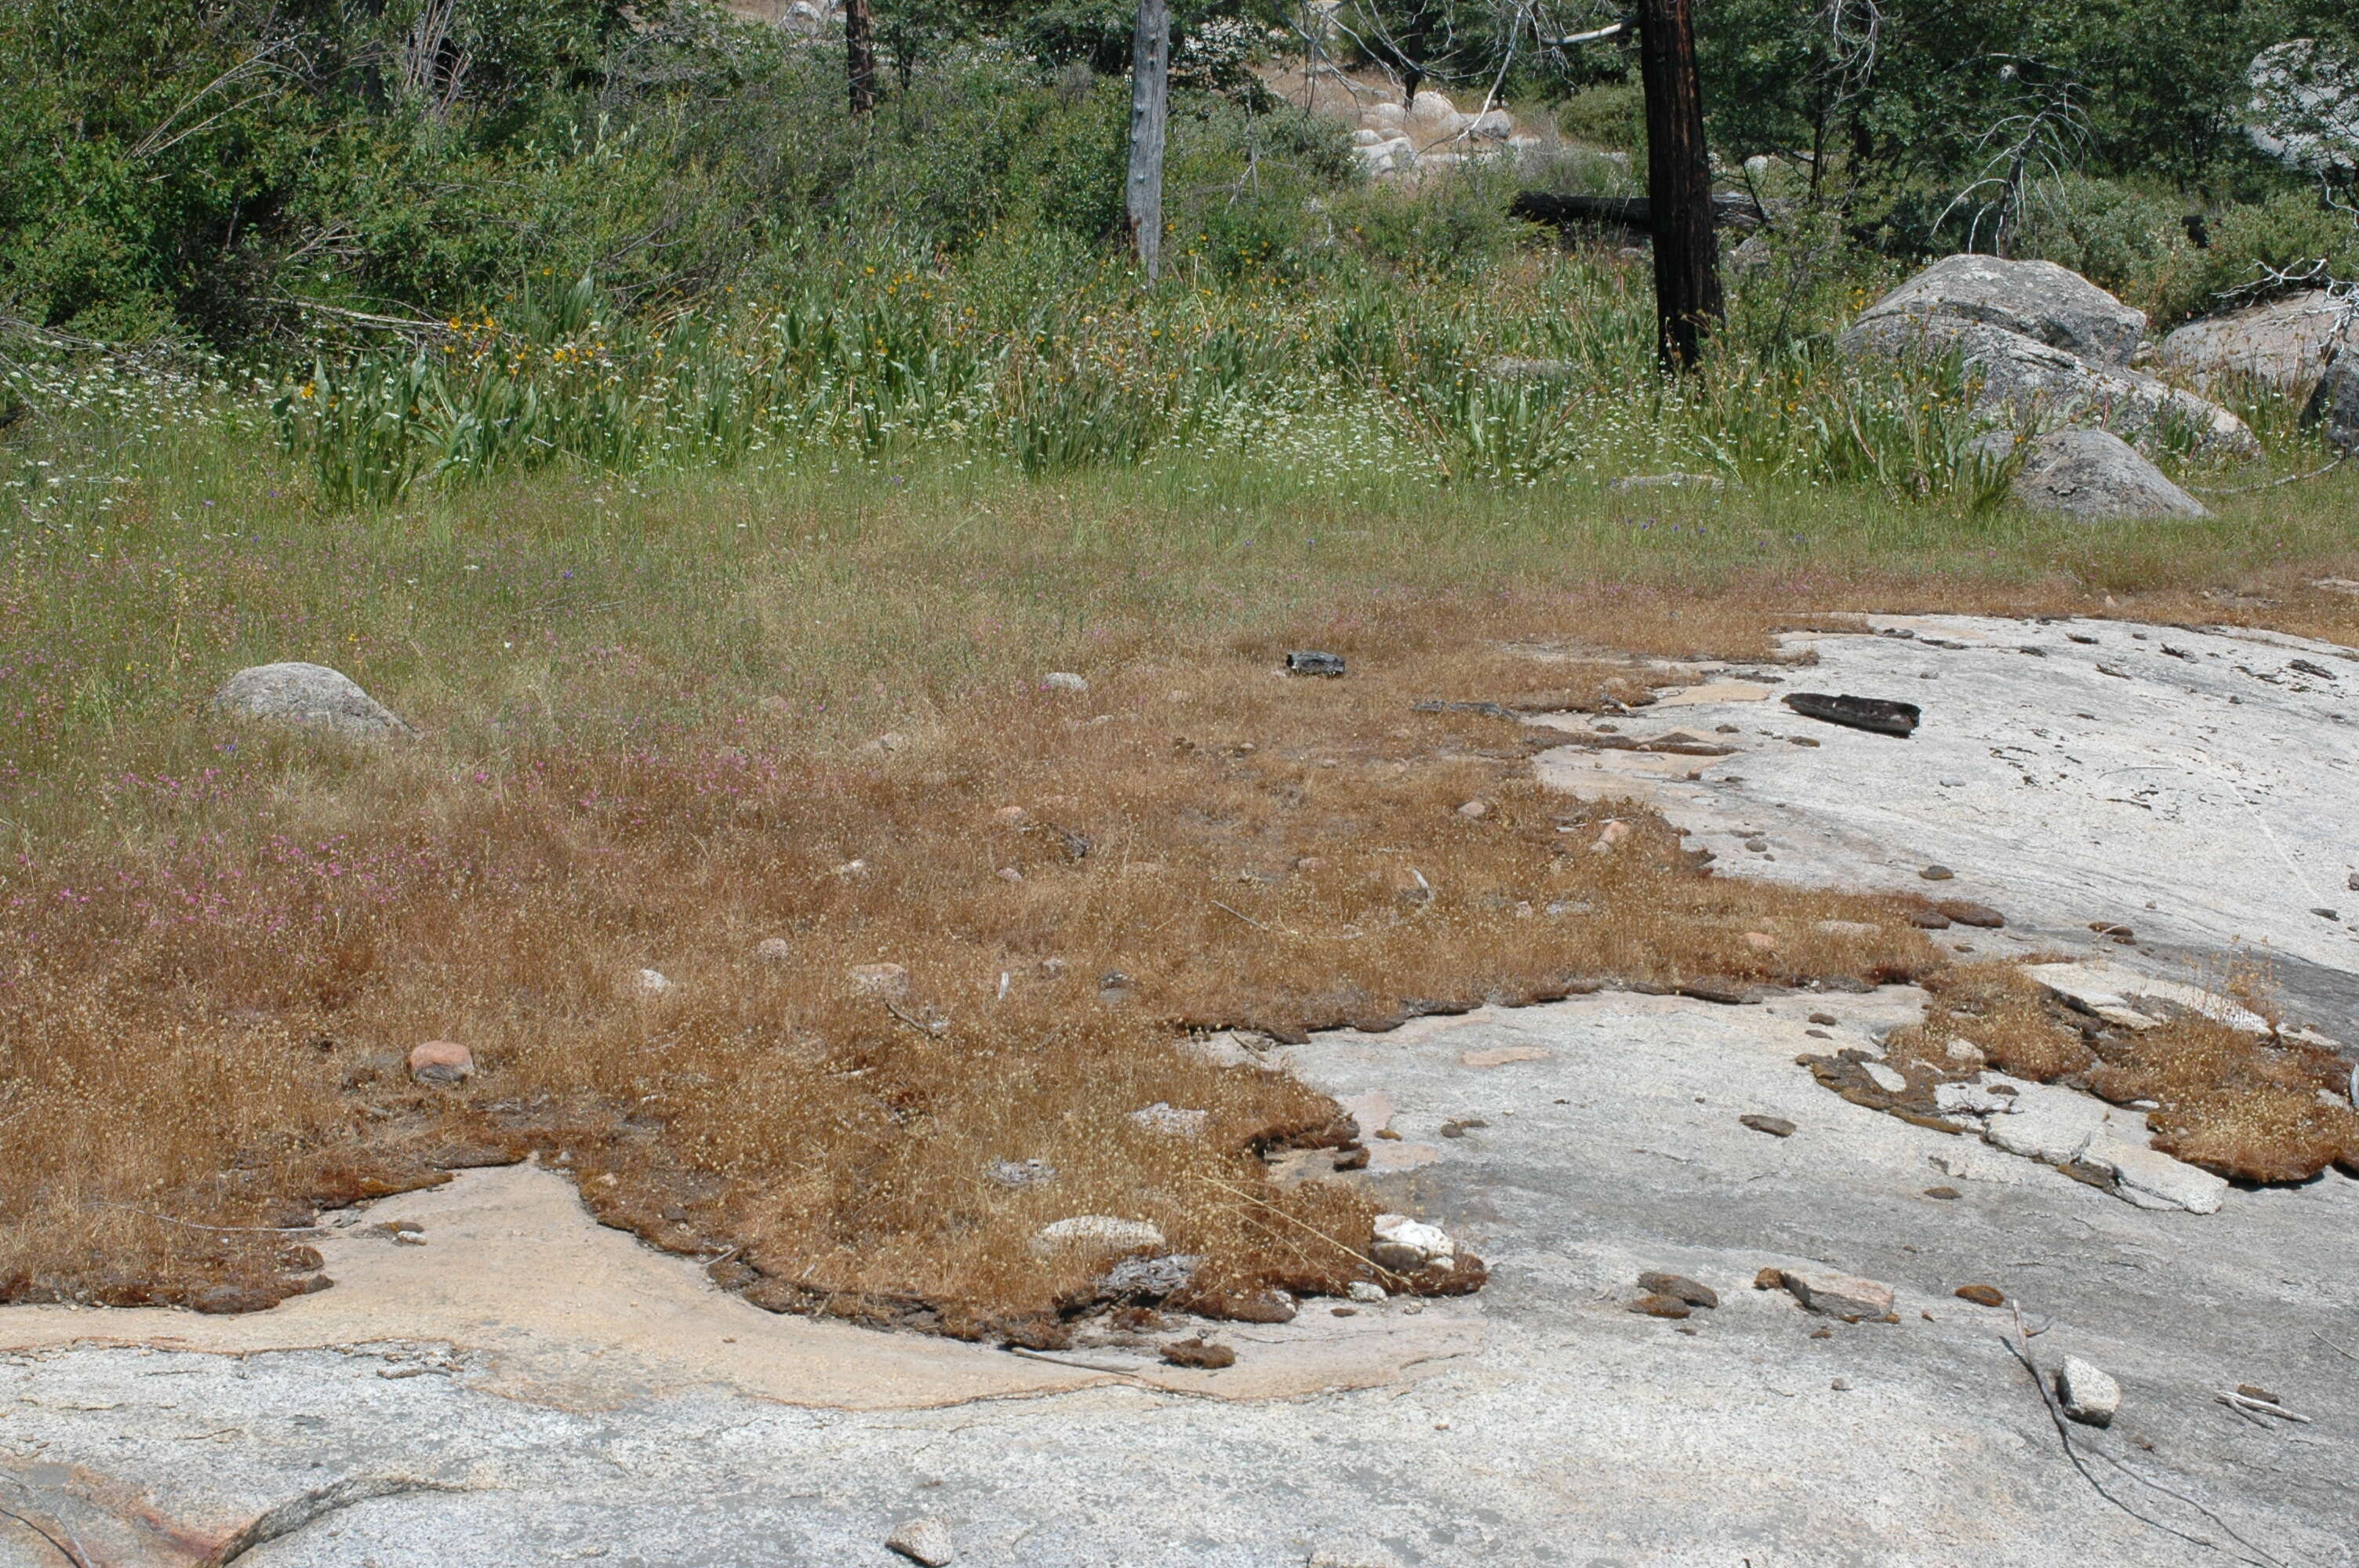 Image of Yosemite tarweed